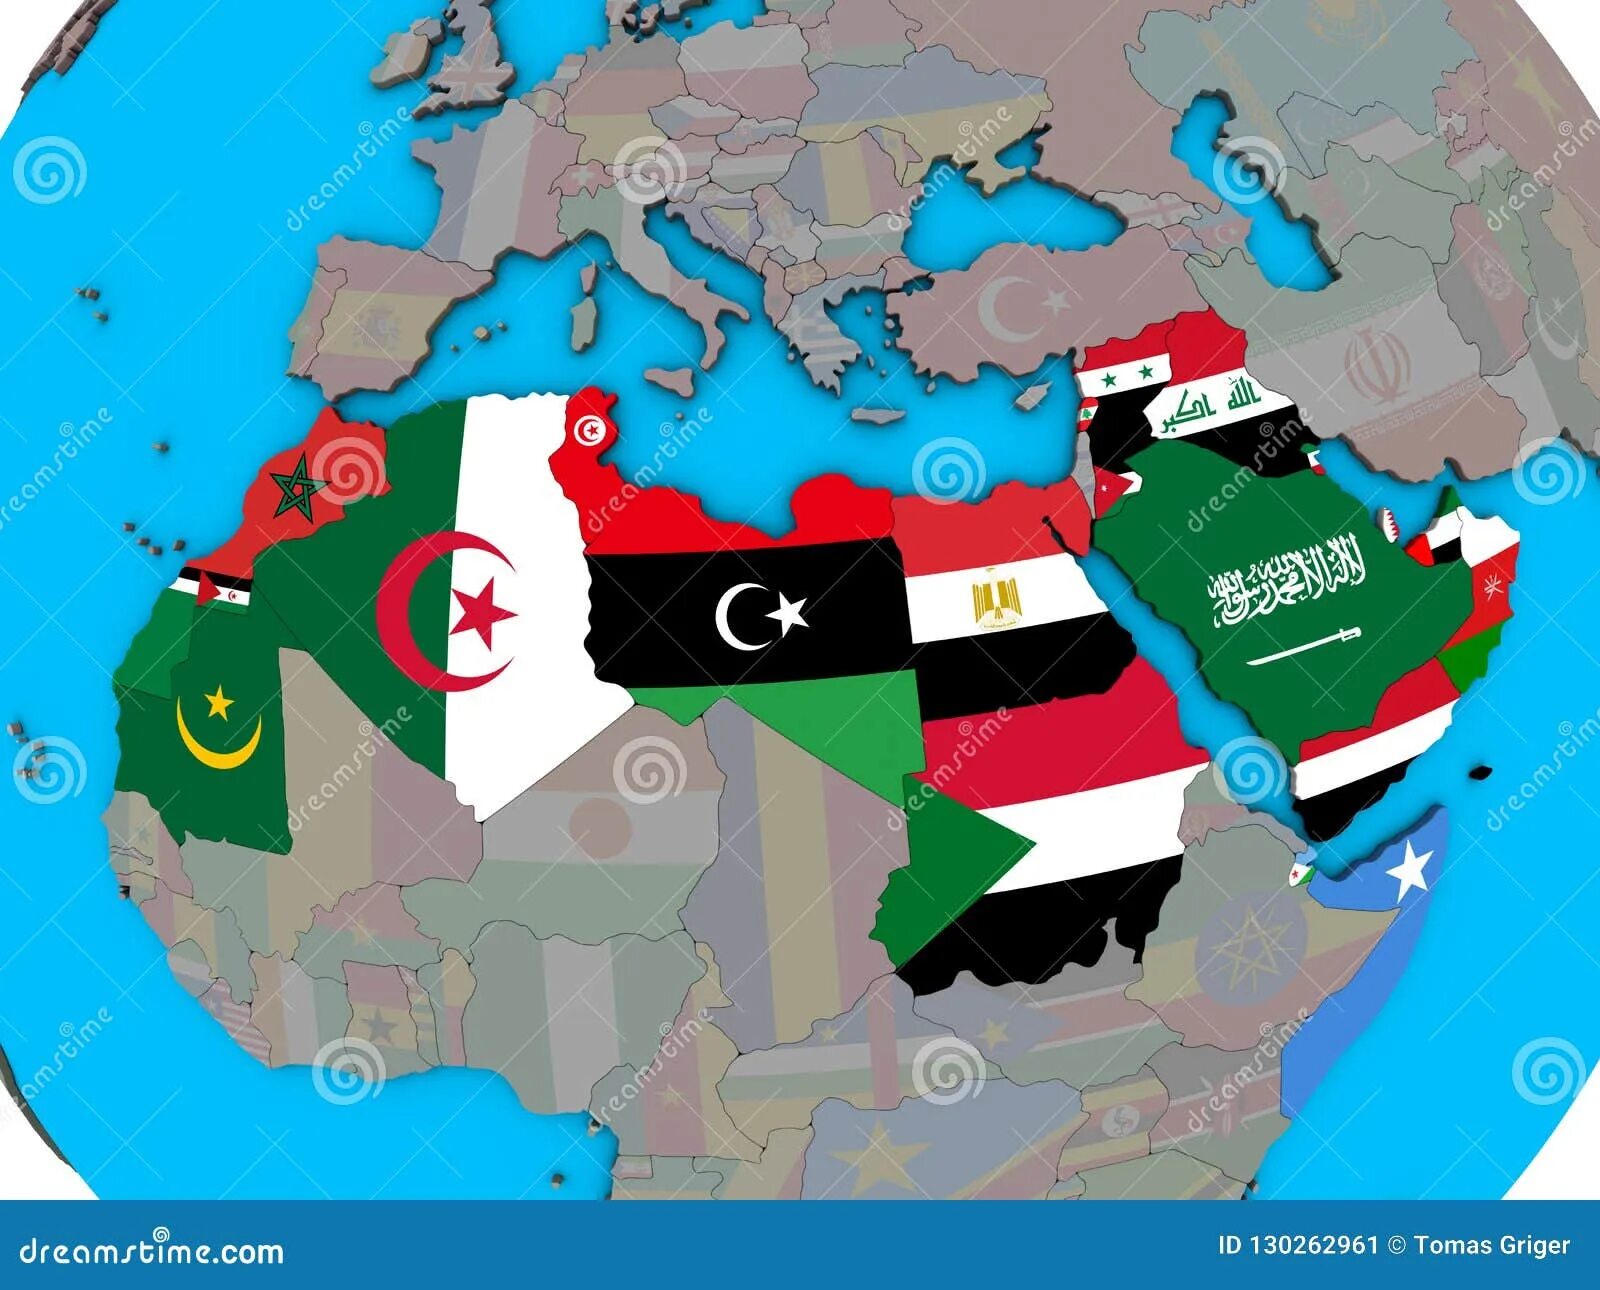 Арабский язык карта. Лига арабских государств Countryballs. Флаги арабских стран. Карта арабских стран с флагами. Арабские государства на карте.